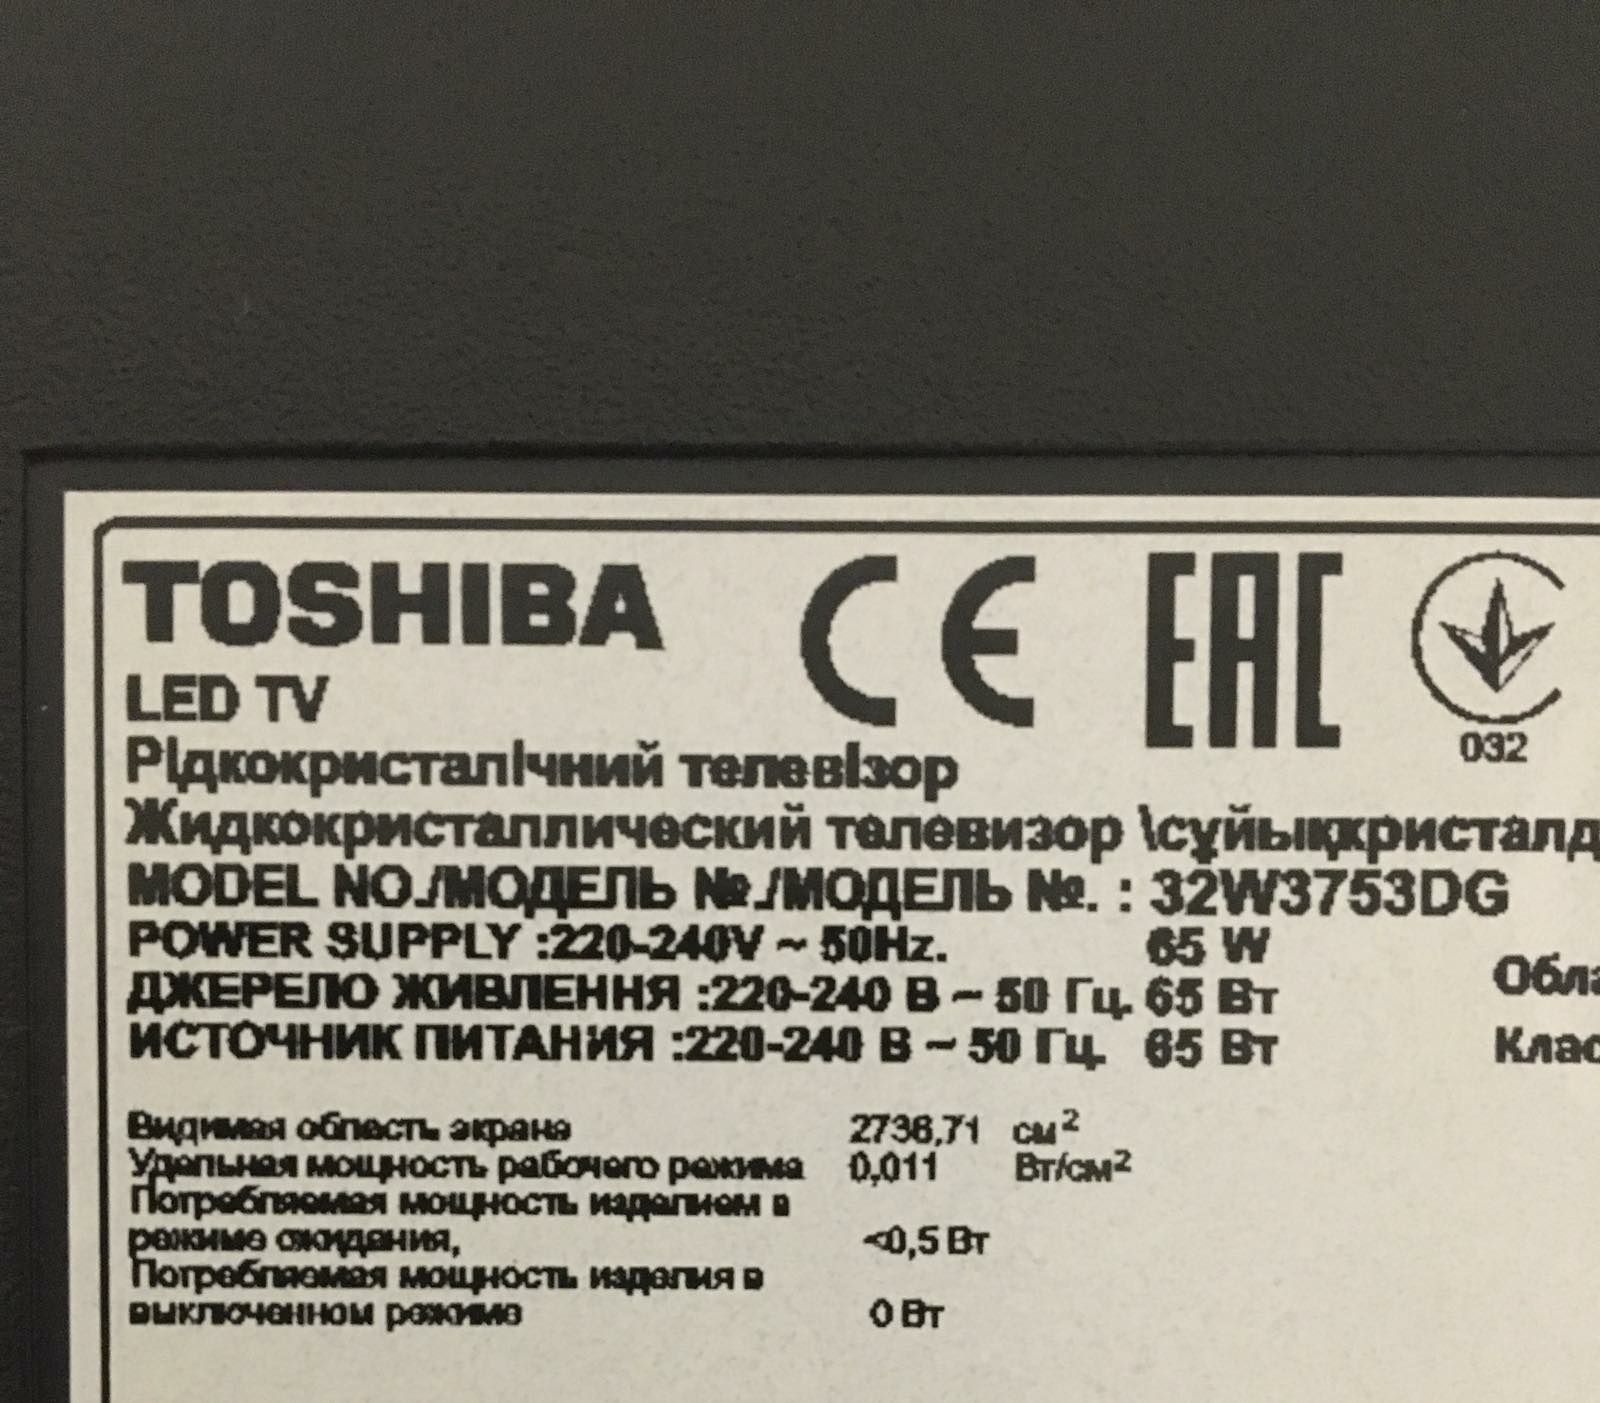 Toshiba 32W3753DG Smart Tv с інтернетом ( 32 дюйма )